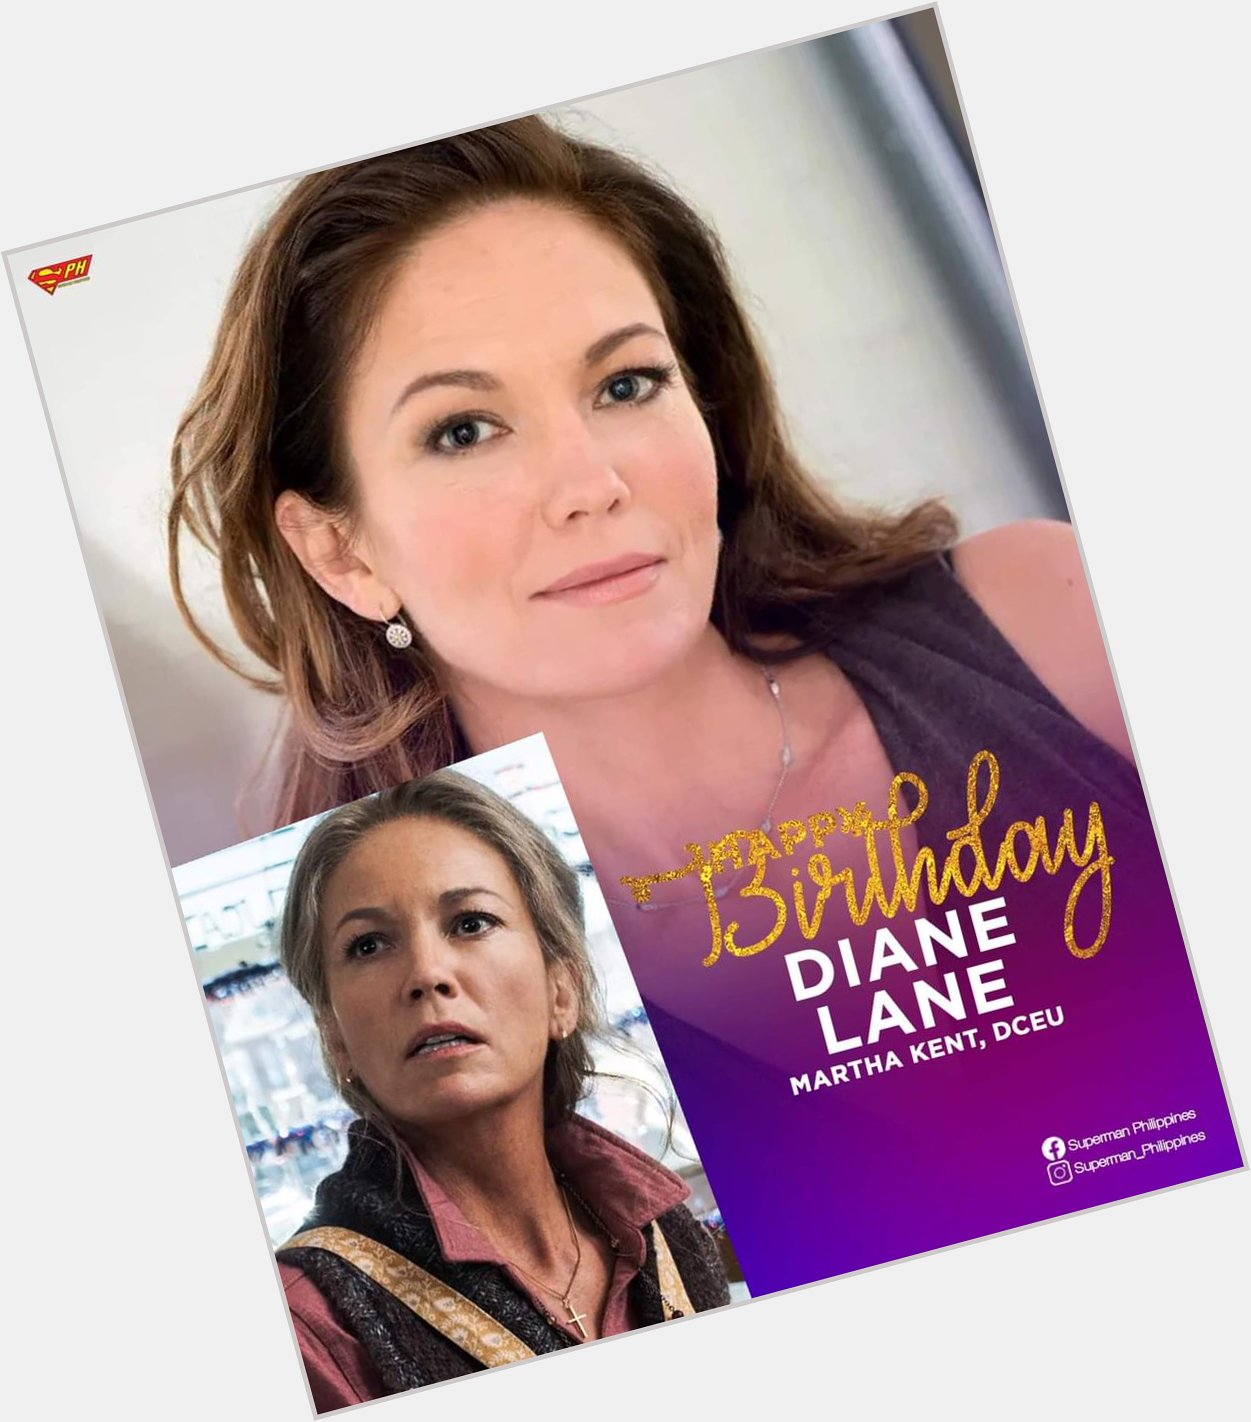 Happy birthday, Diane Lane aka Martha Kent       